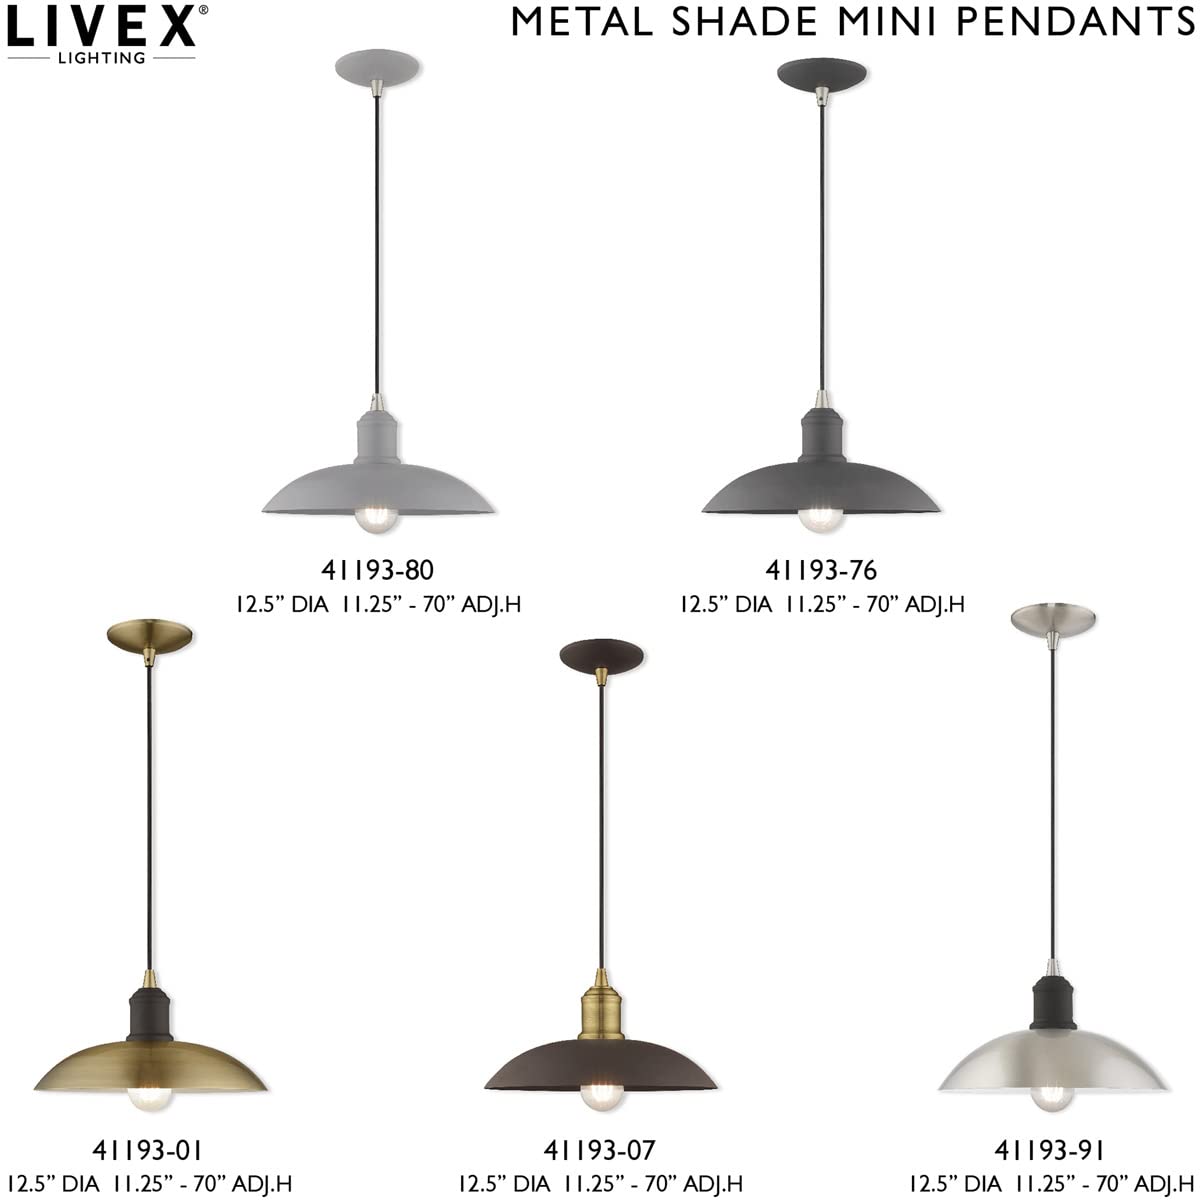 Livex Lighting 41193-07 Metal Shade - 12.5" One Light Mini Pendant, Bronze Finish with Bronze Metal Shade